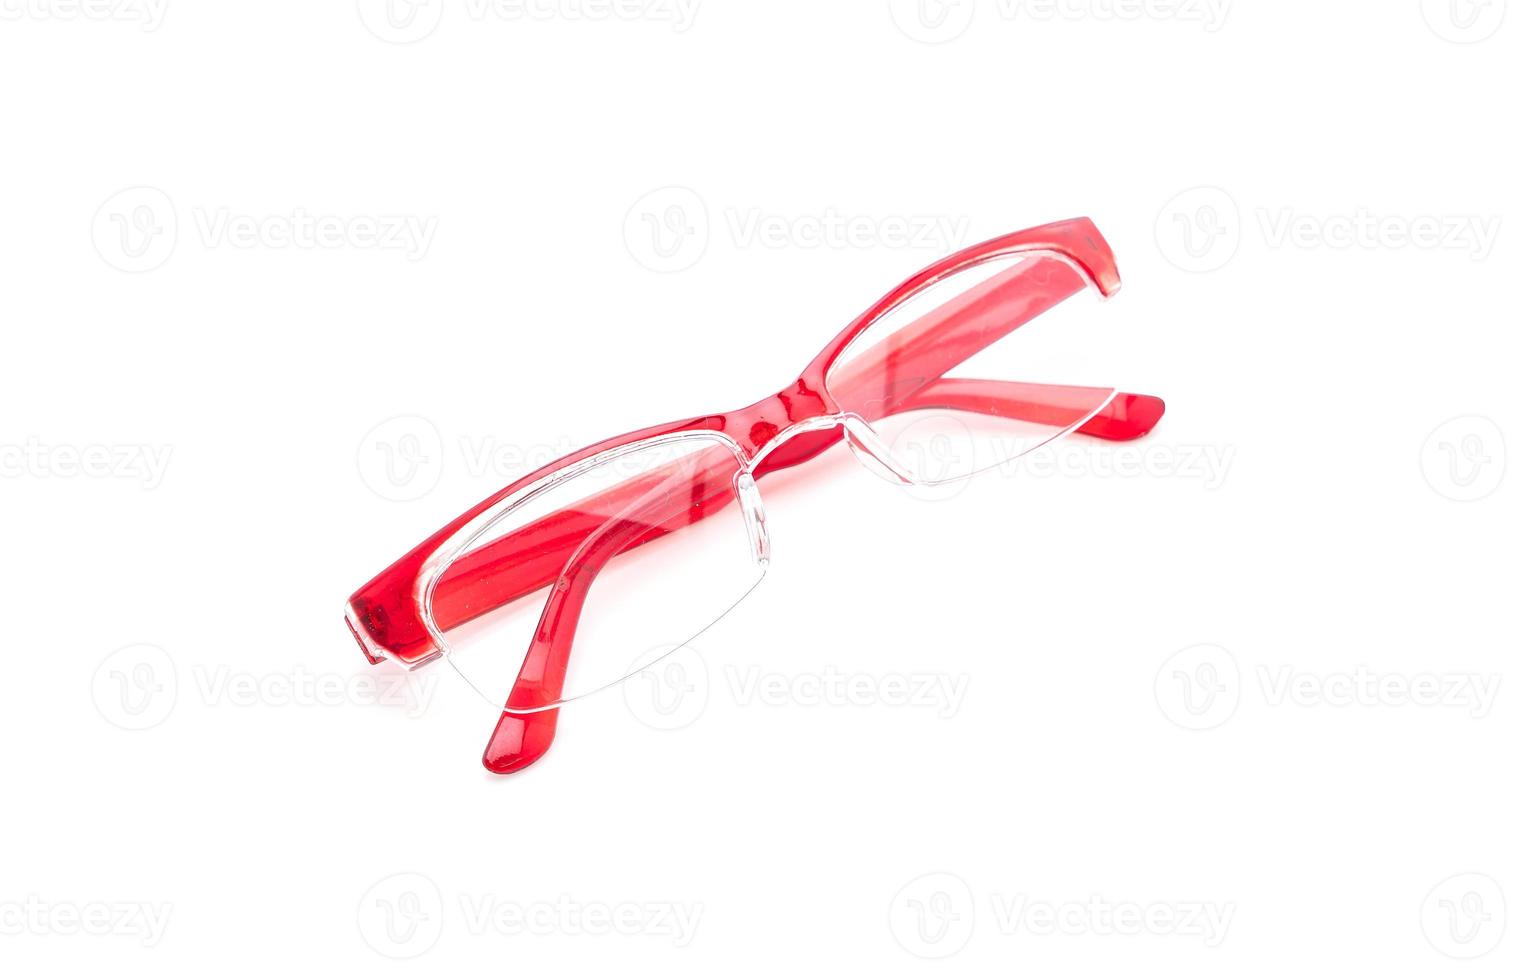 Eyeglasses, spectacles, or glasses on white background photo